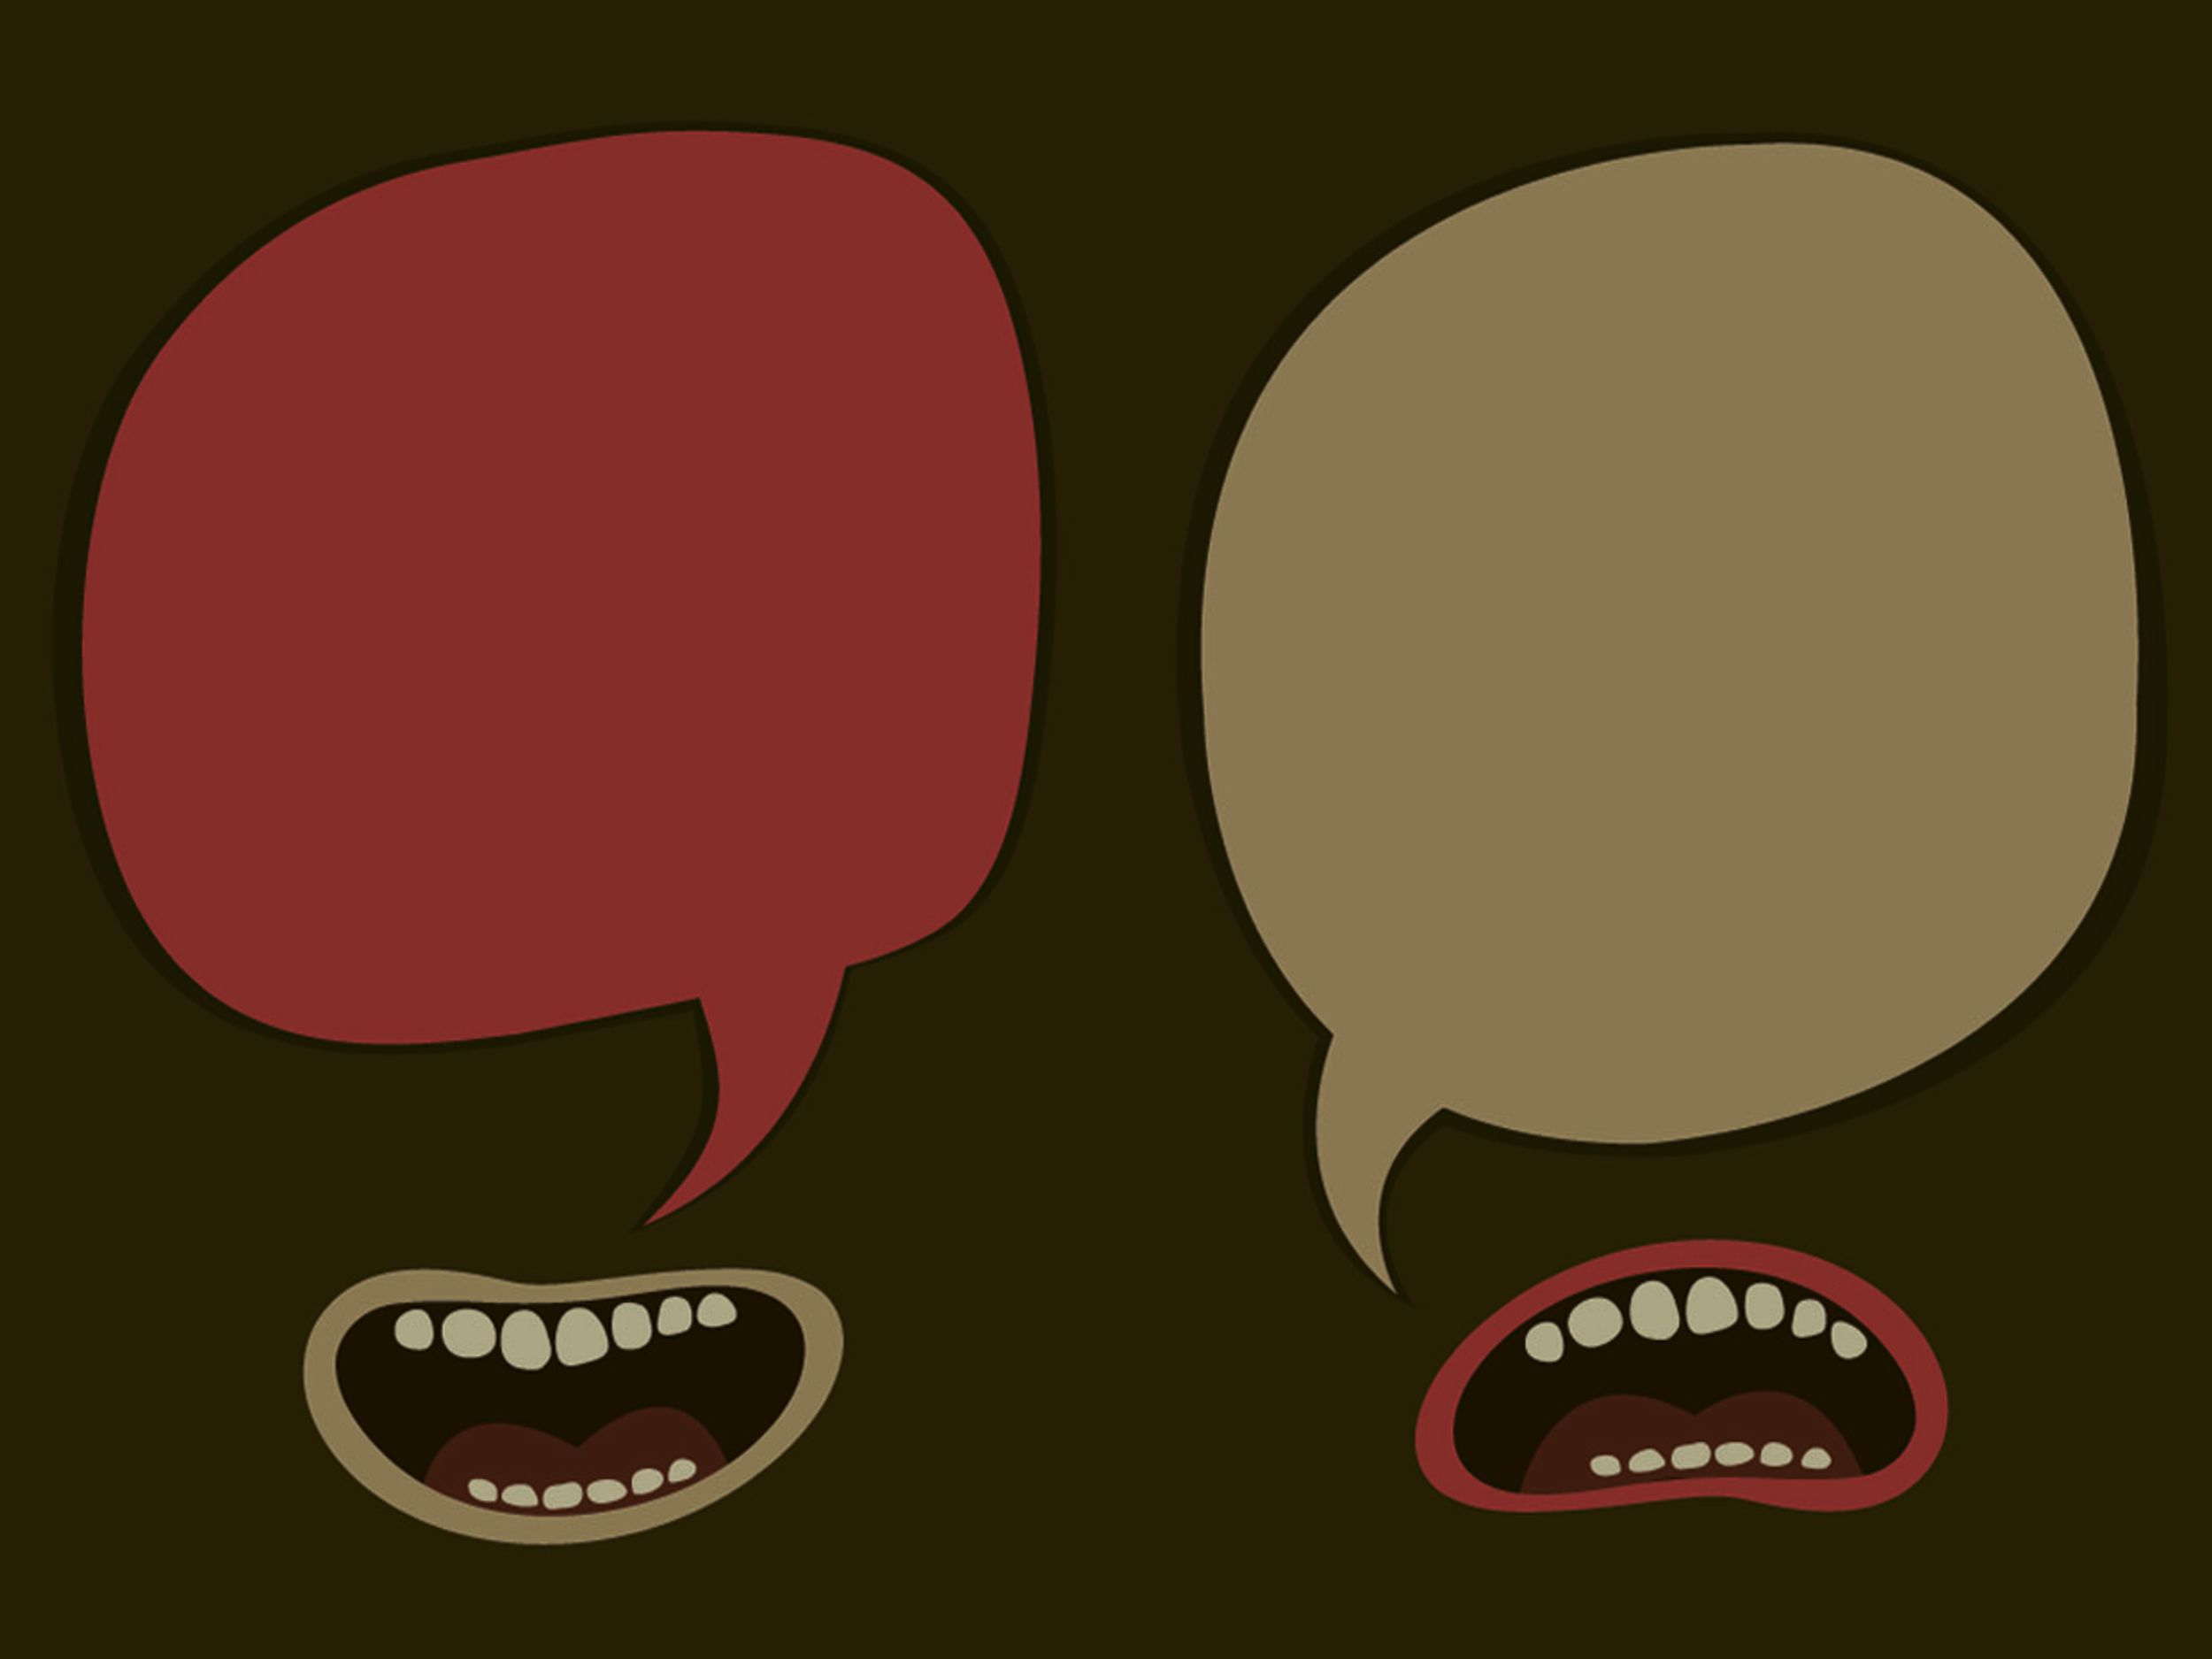 An illustration shows two mouths talking below two blank speech bubbles.